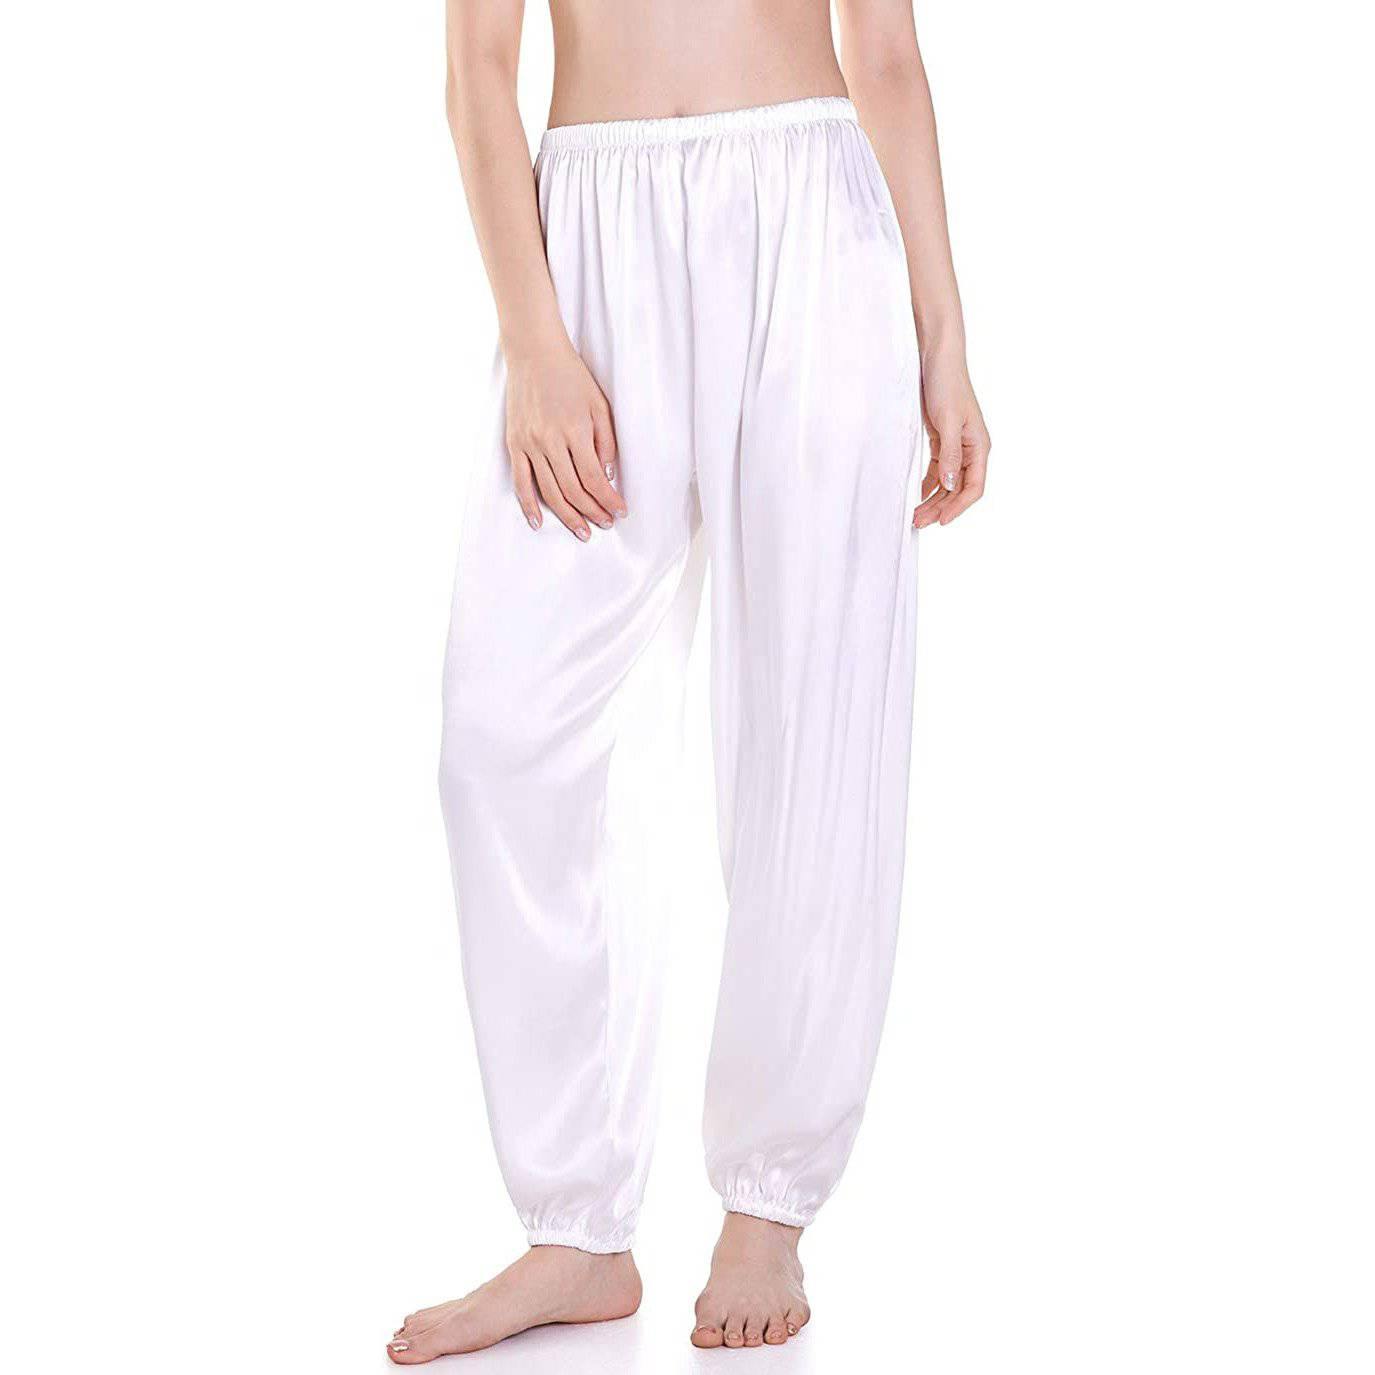 Elaydool Summer Autumn Printing Women Pajama Bottoms Elastic Waist  Ankle-Length Pants Sleep Wear for Women 